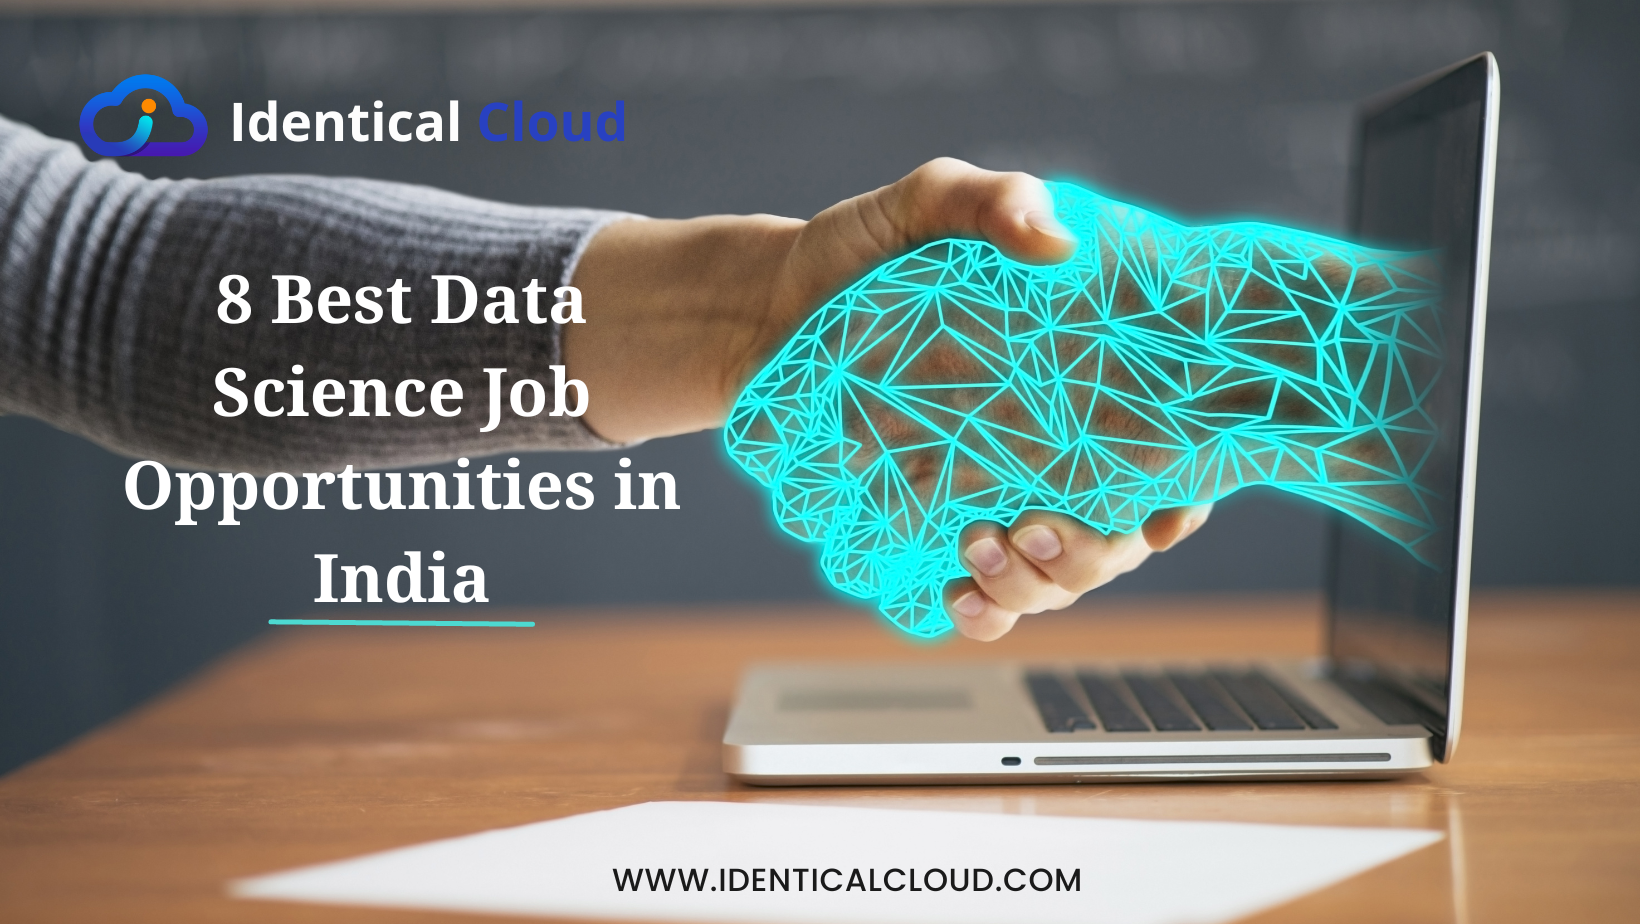 8 Best Data Science Job Opportunities in India - identicalcloud.com